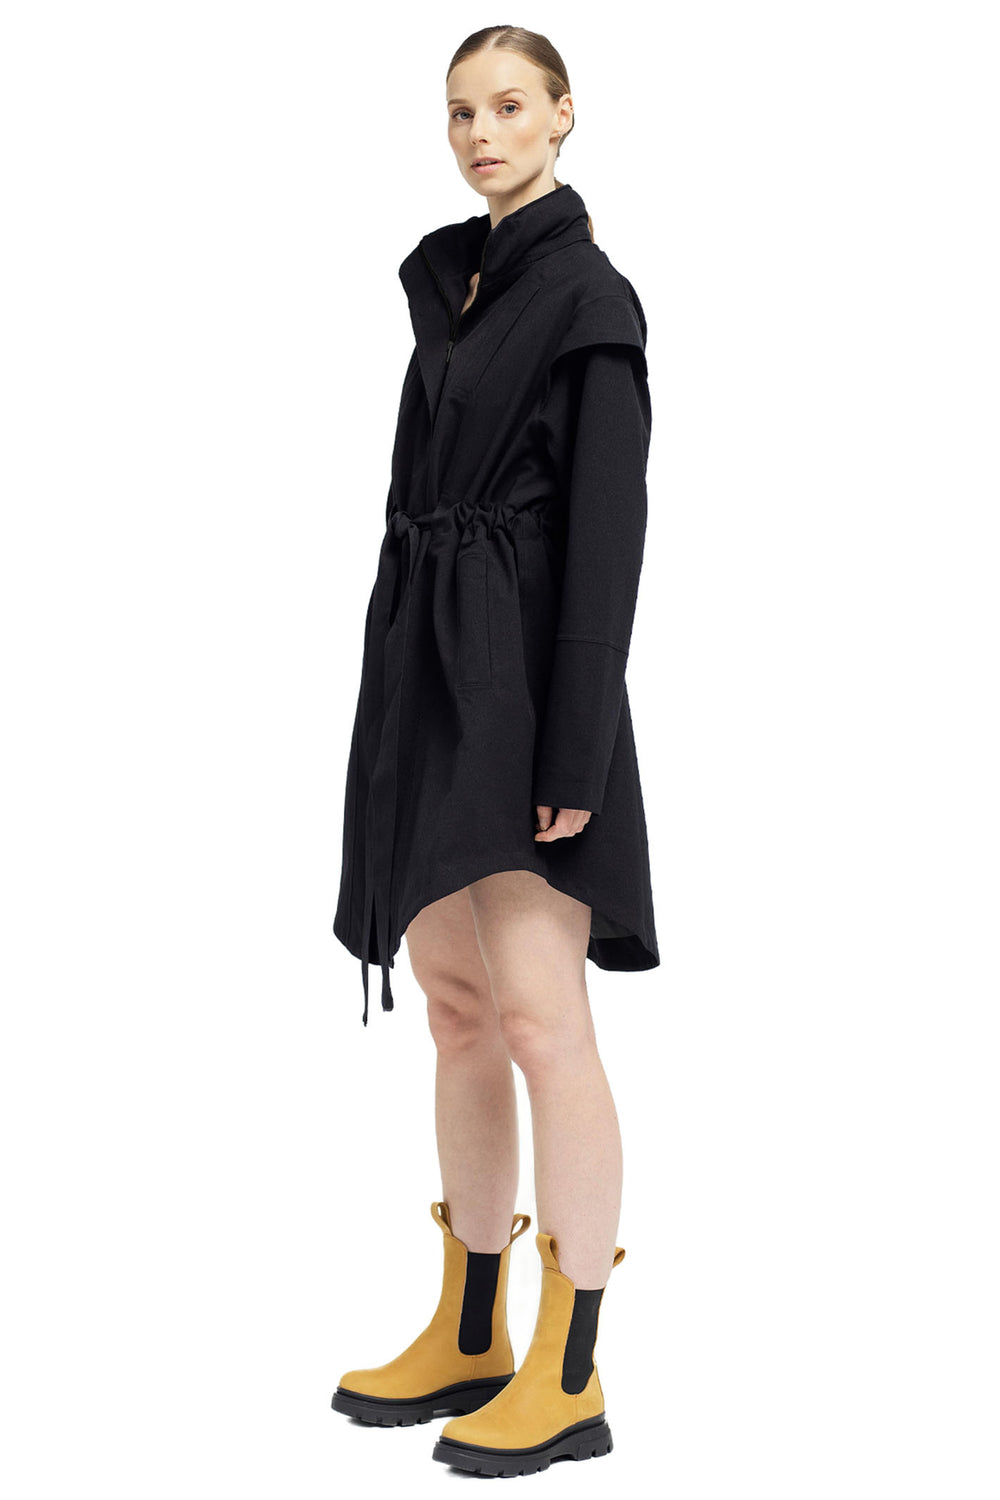 BRGN Monsun Coat New Black Waterproof 15032R2 095 - Olivia Grace Fashion